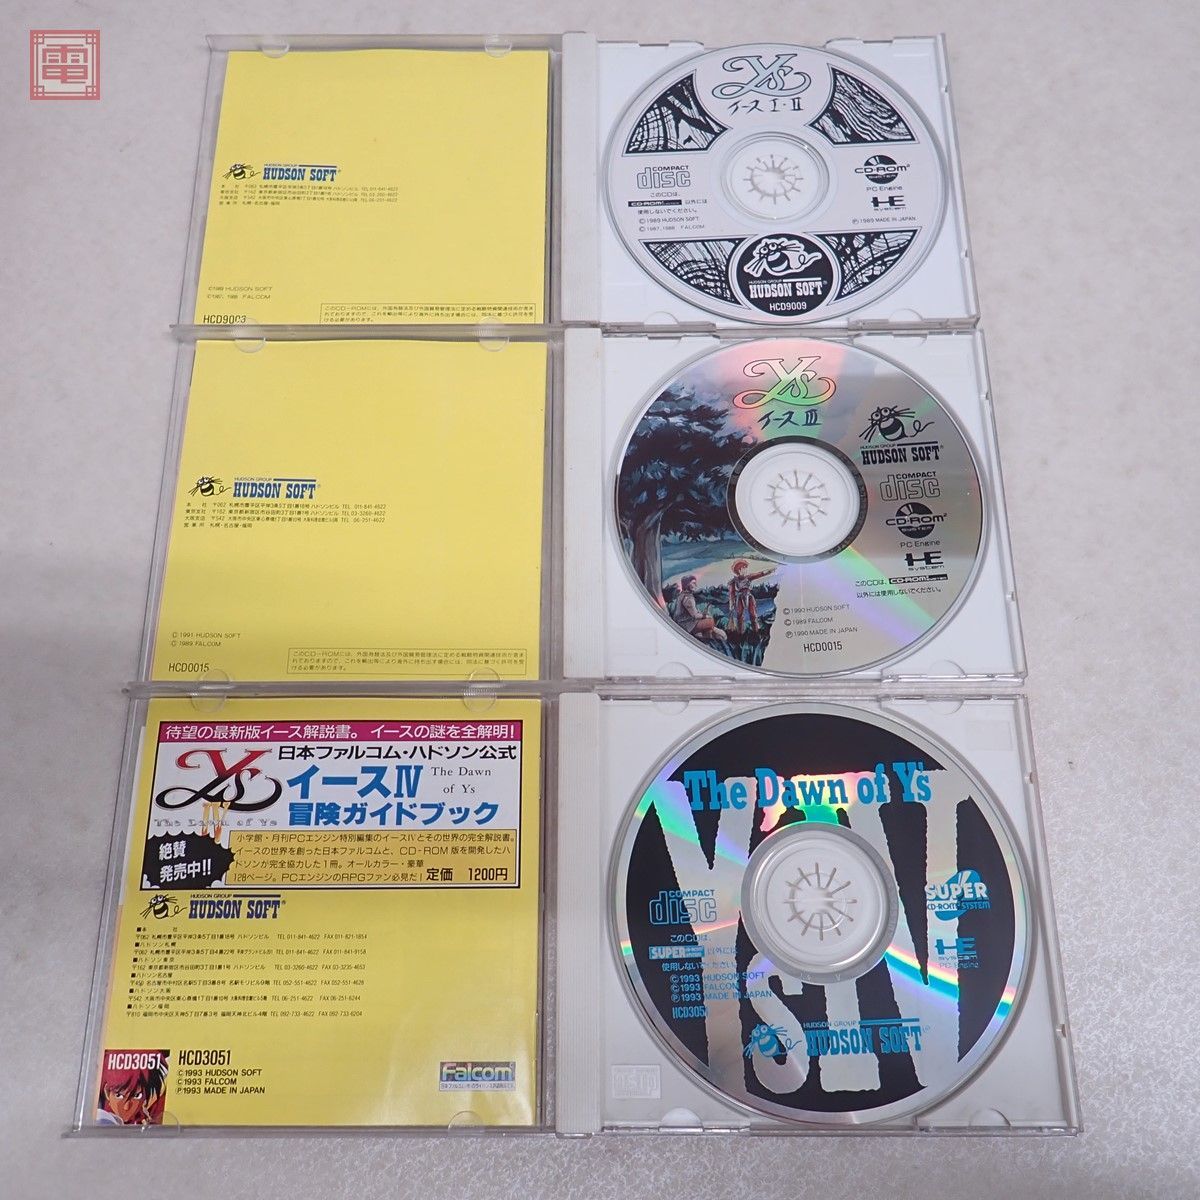 PCE PCエンジン CD-ROM2/SUPER CD-ROM2 Ys イース I・II/III/IV まとめて3本セット HUDSON SOFT/Falcom 箱説付【10_画像2